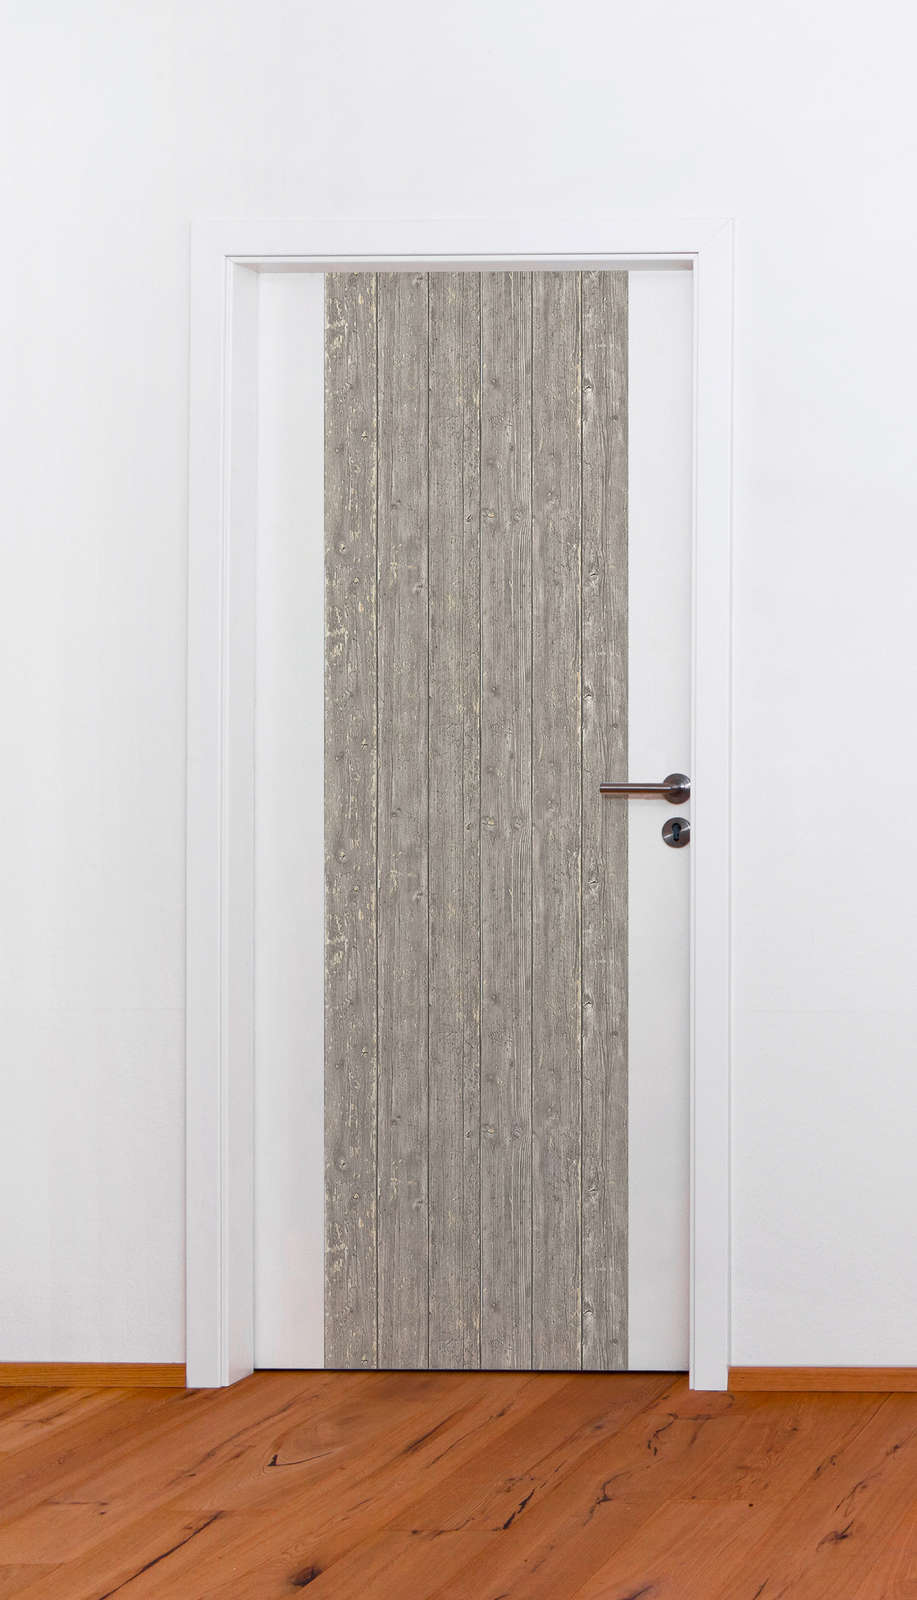             Wallpaper wood optics weathered used look - cream, grey
        